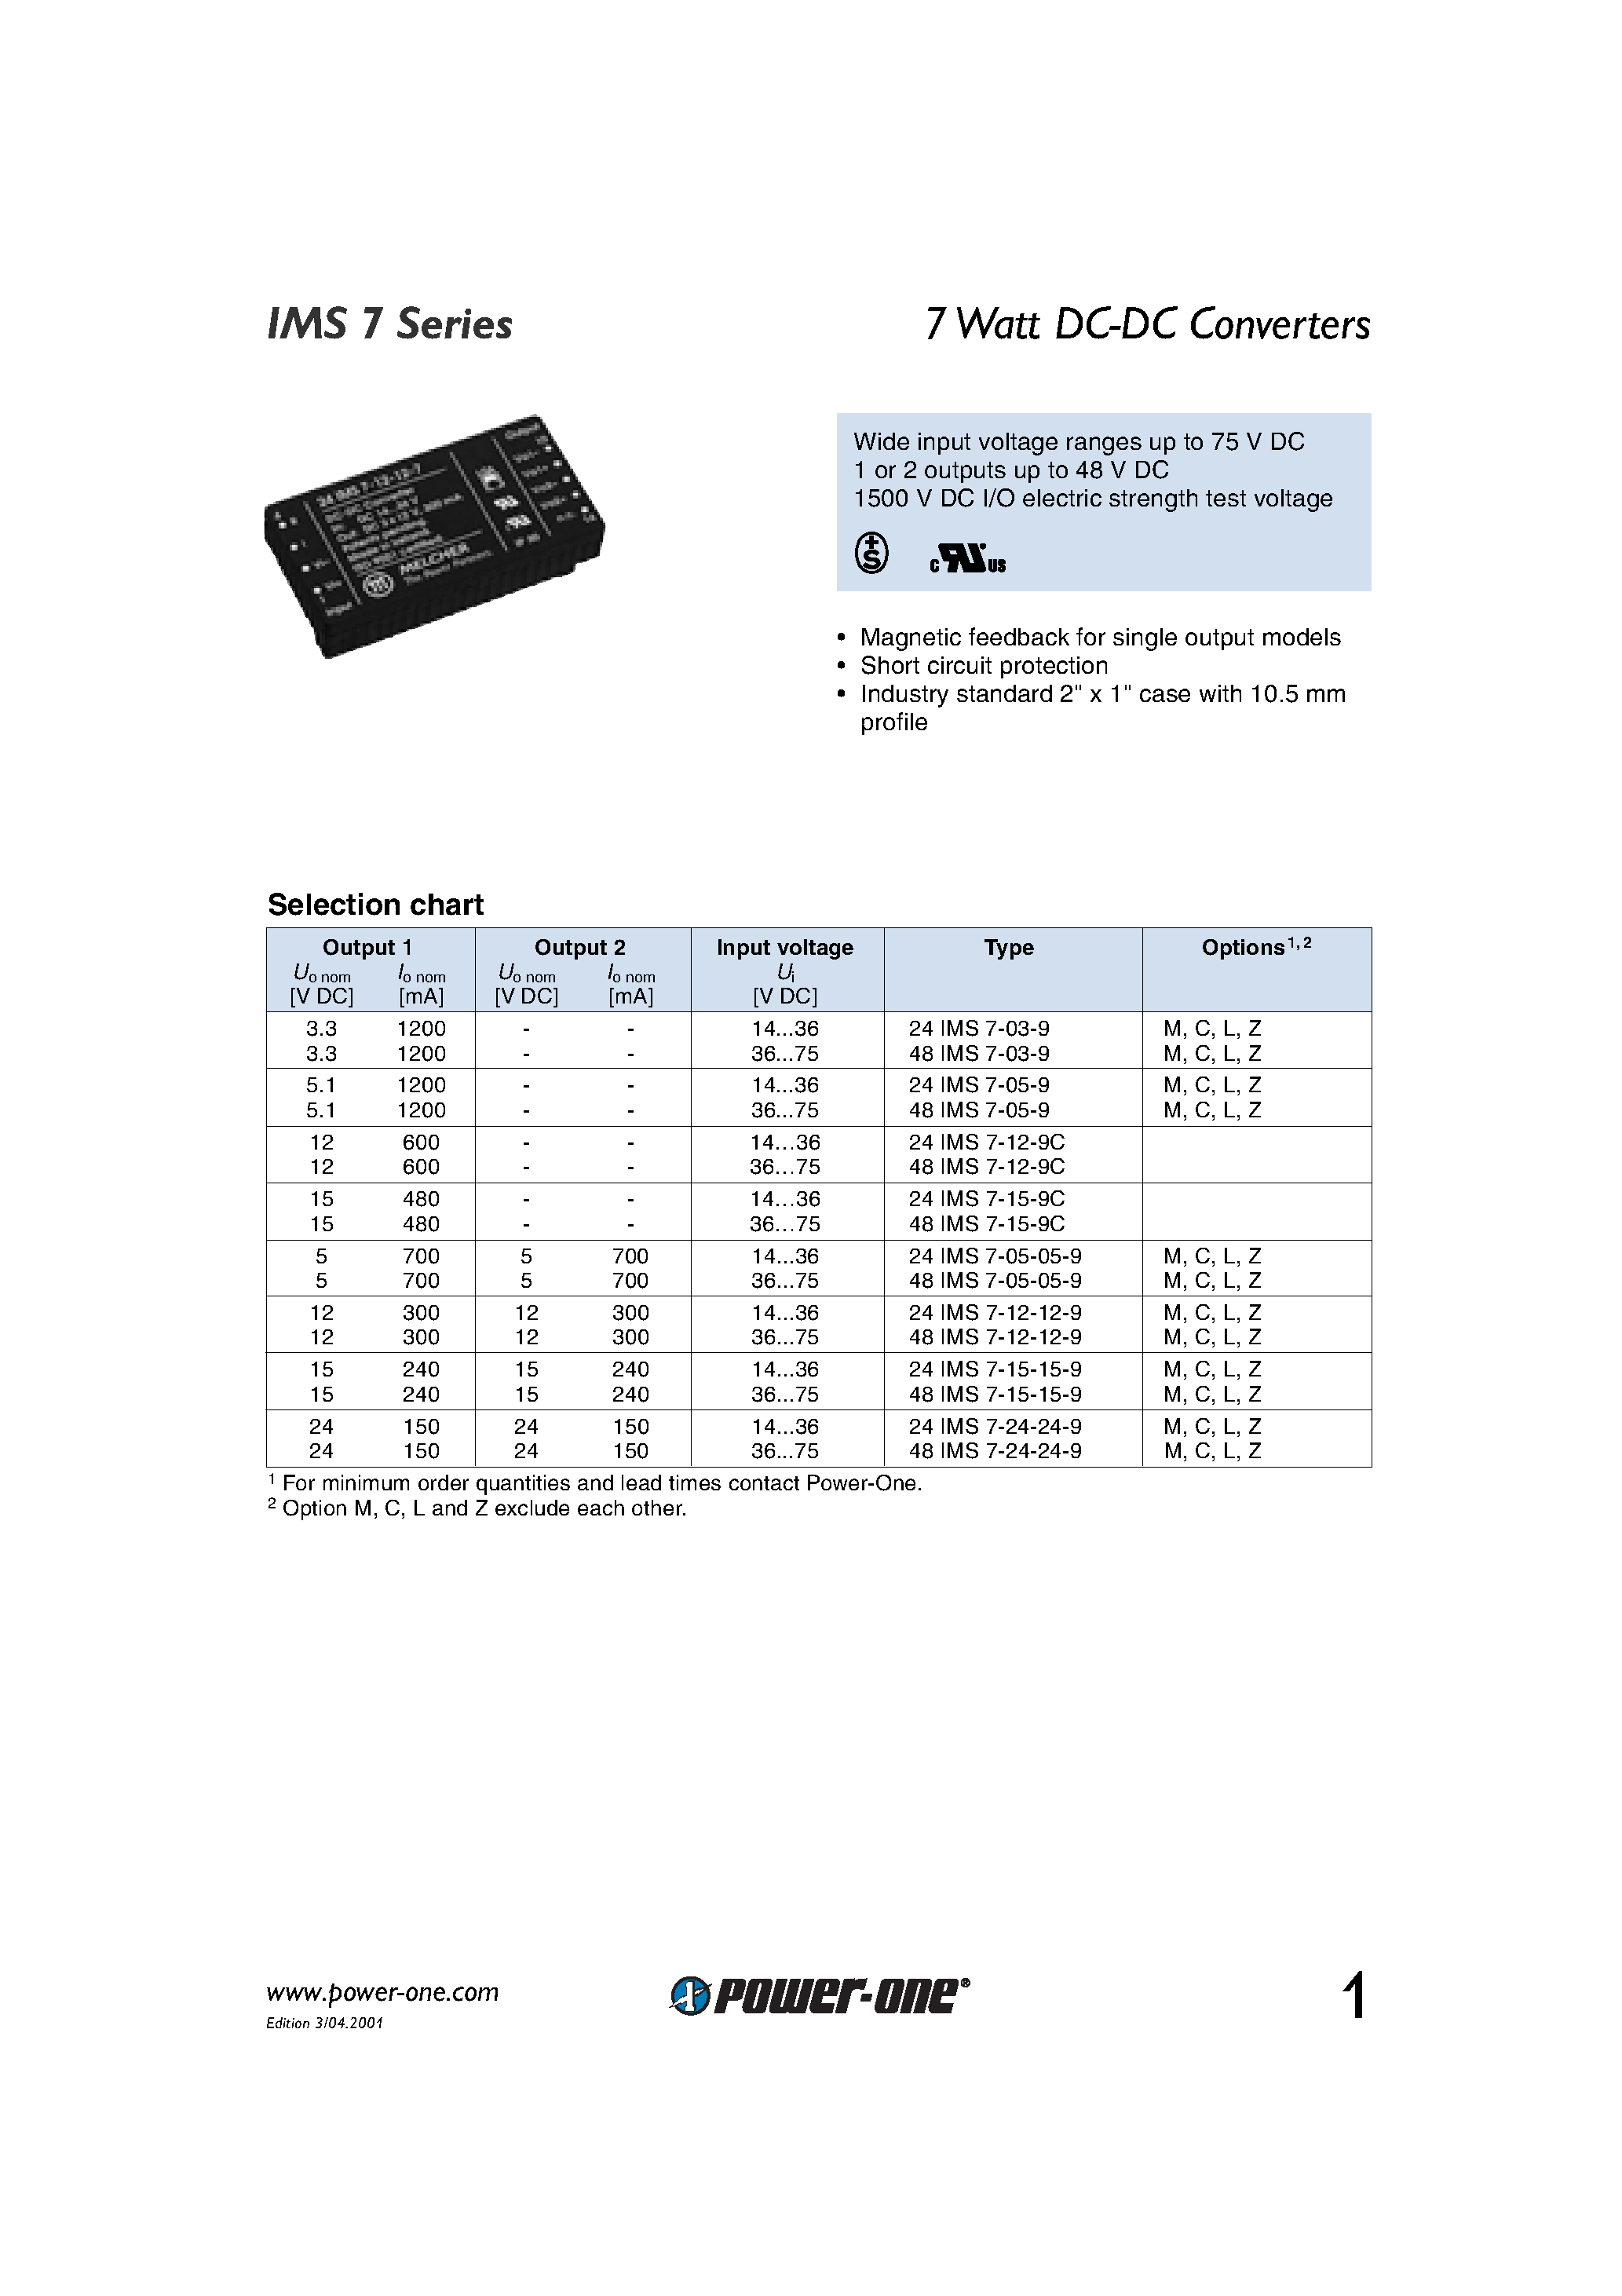 Datasheet 48IMS7-15-15-9 - 7 Watt DC-DC Converters page 1